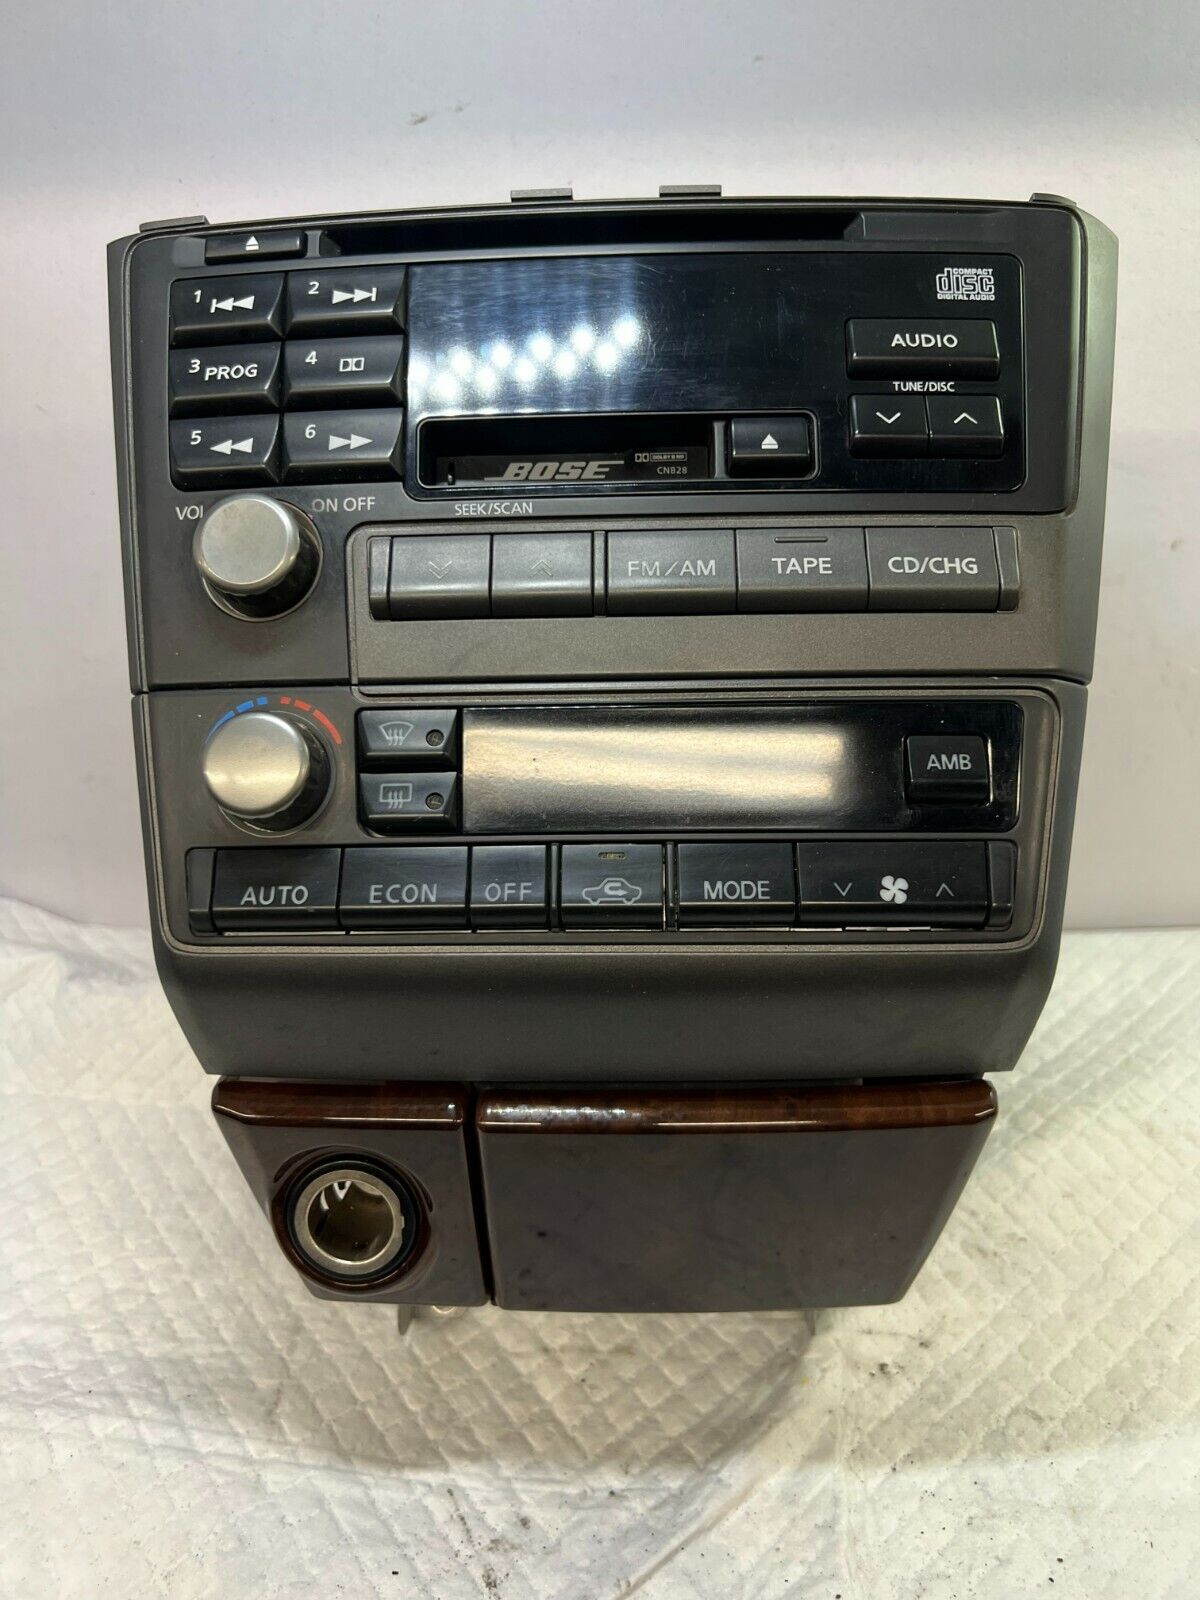 2001 INFINITI I30 AC HEATER CONTROLS AND RADIO AM/FM PLAYER OEM (391)